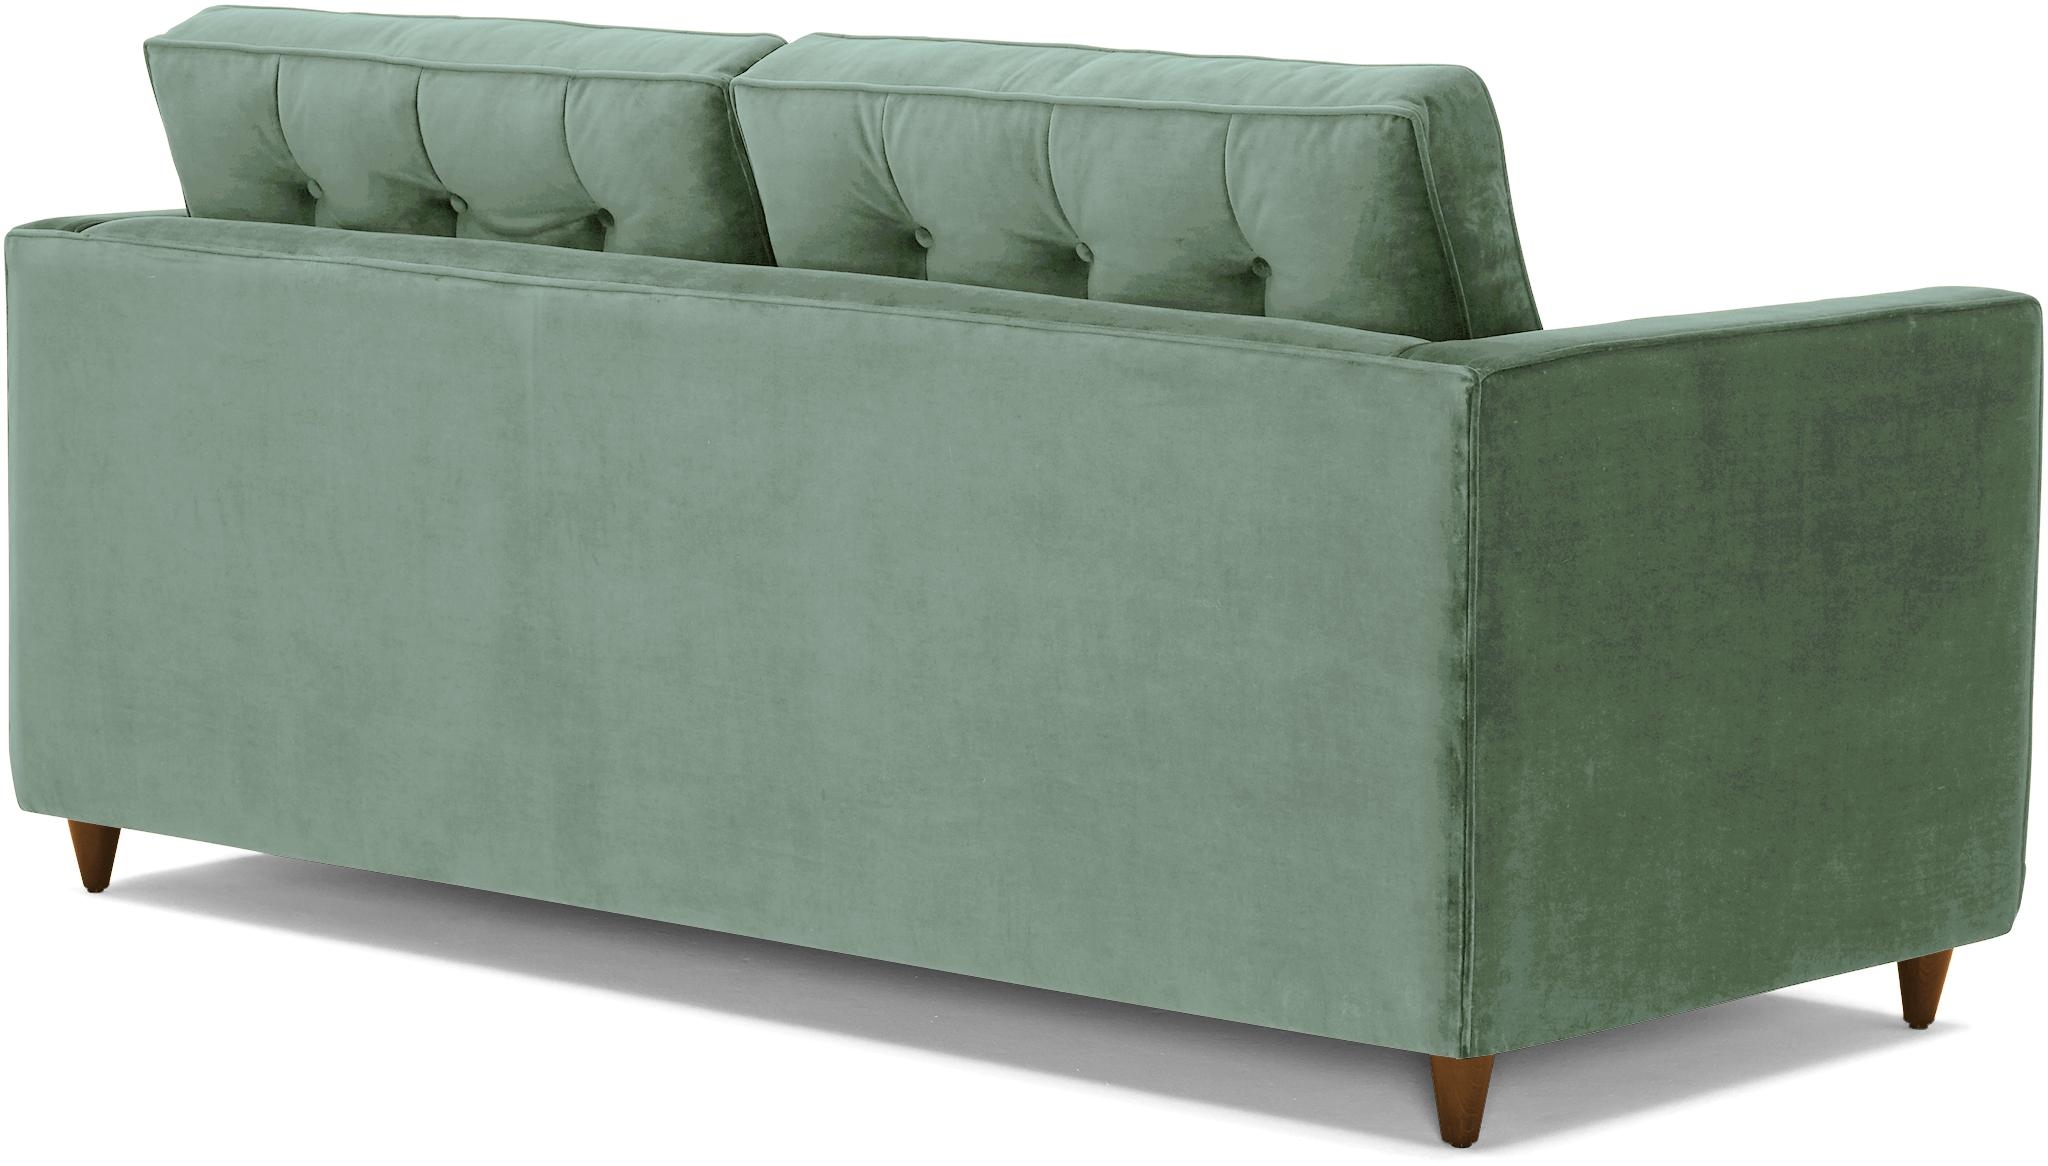 Green Braxton Mid Century Modern Sleeper Sofa - Essence Aqua - Mocha - Image 3